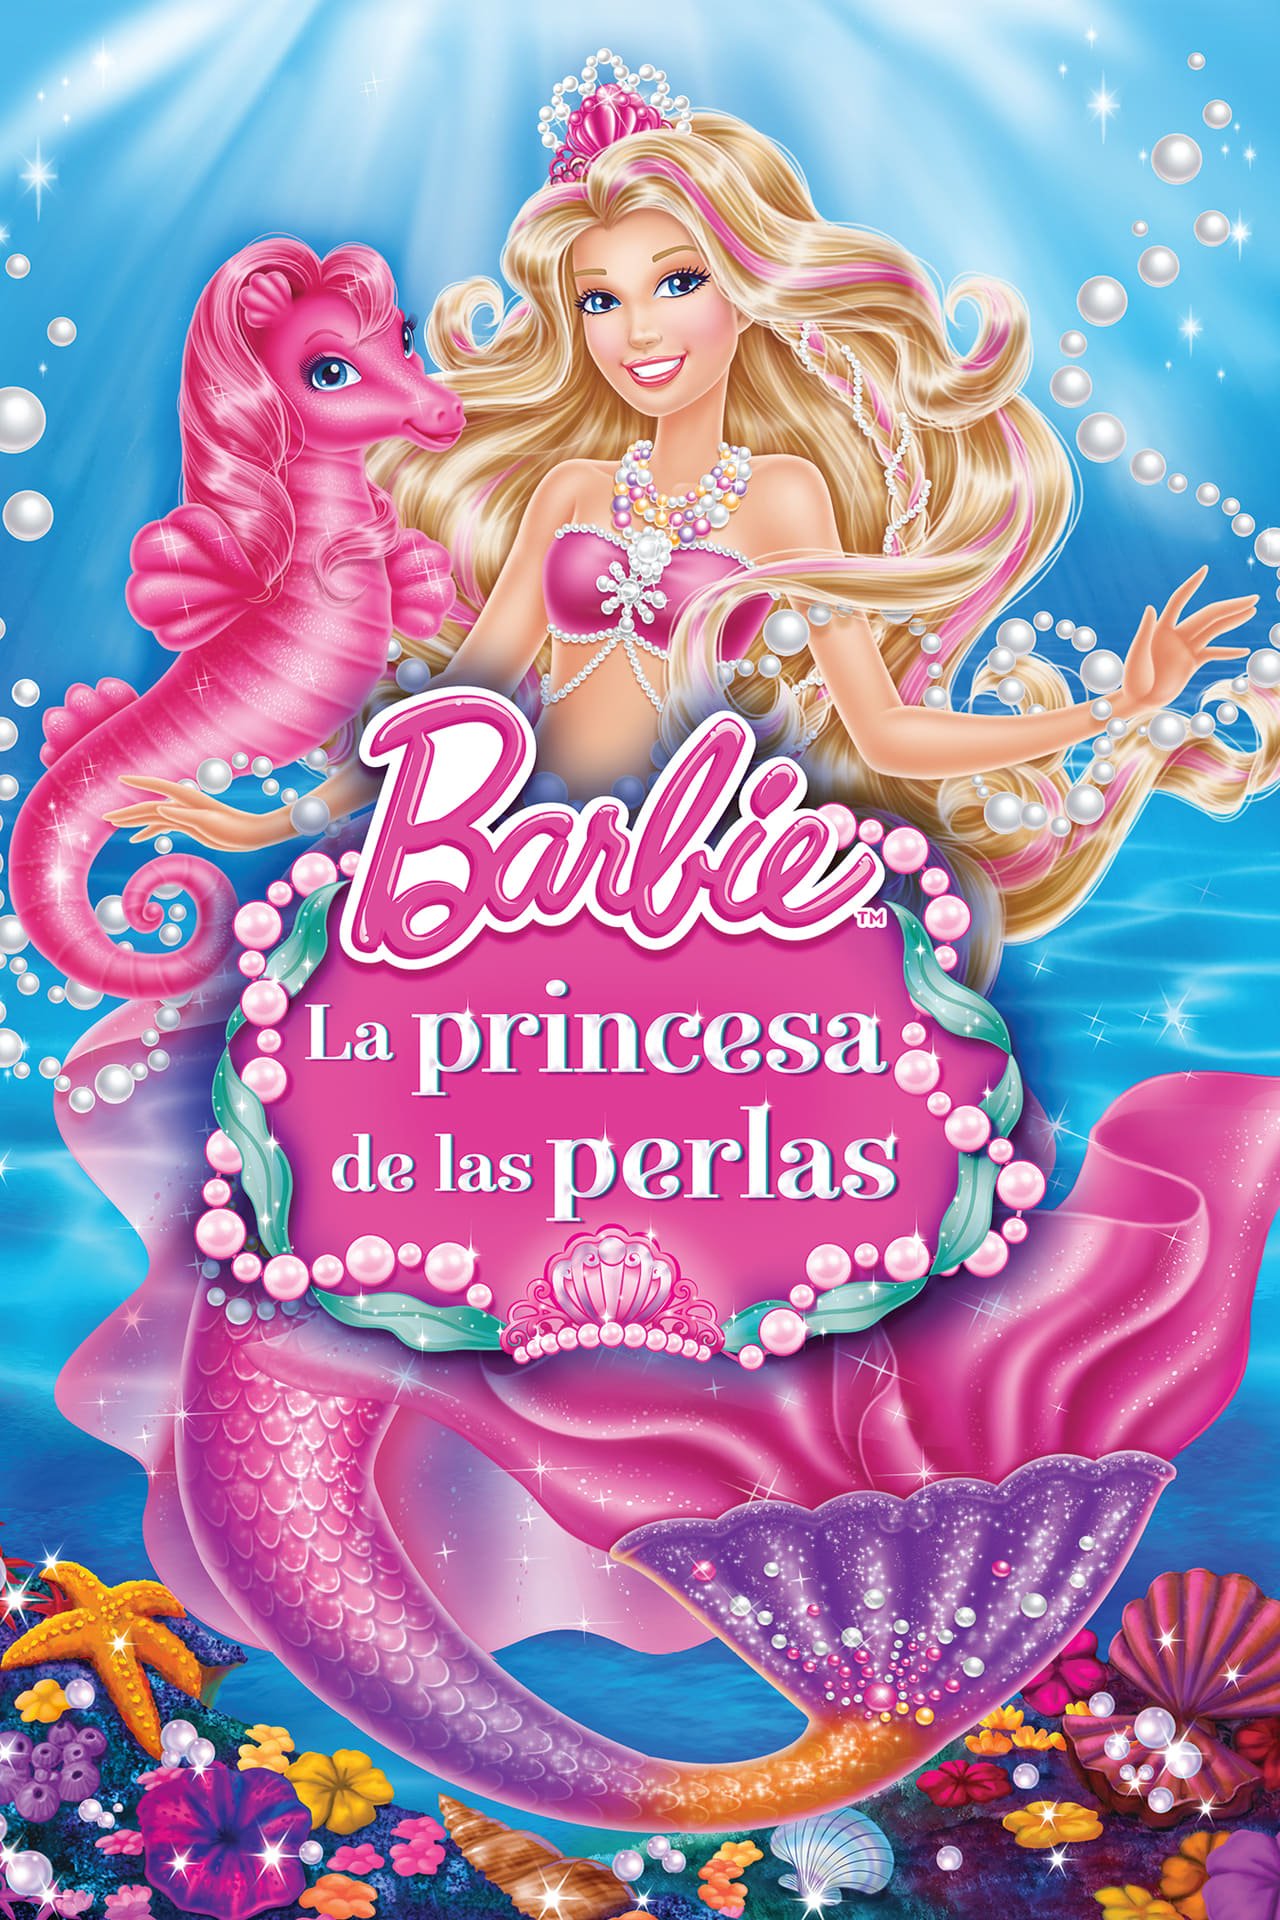 barbie movies download free